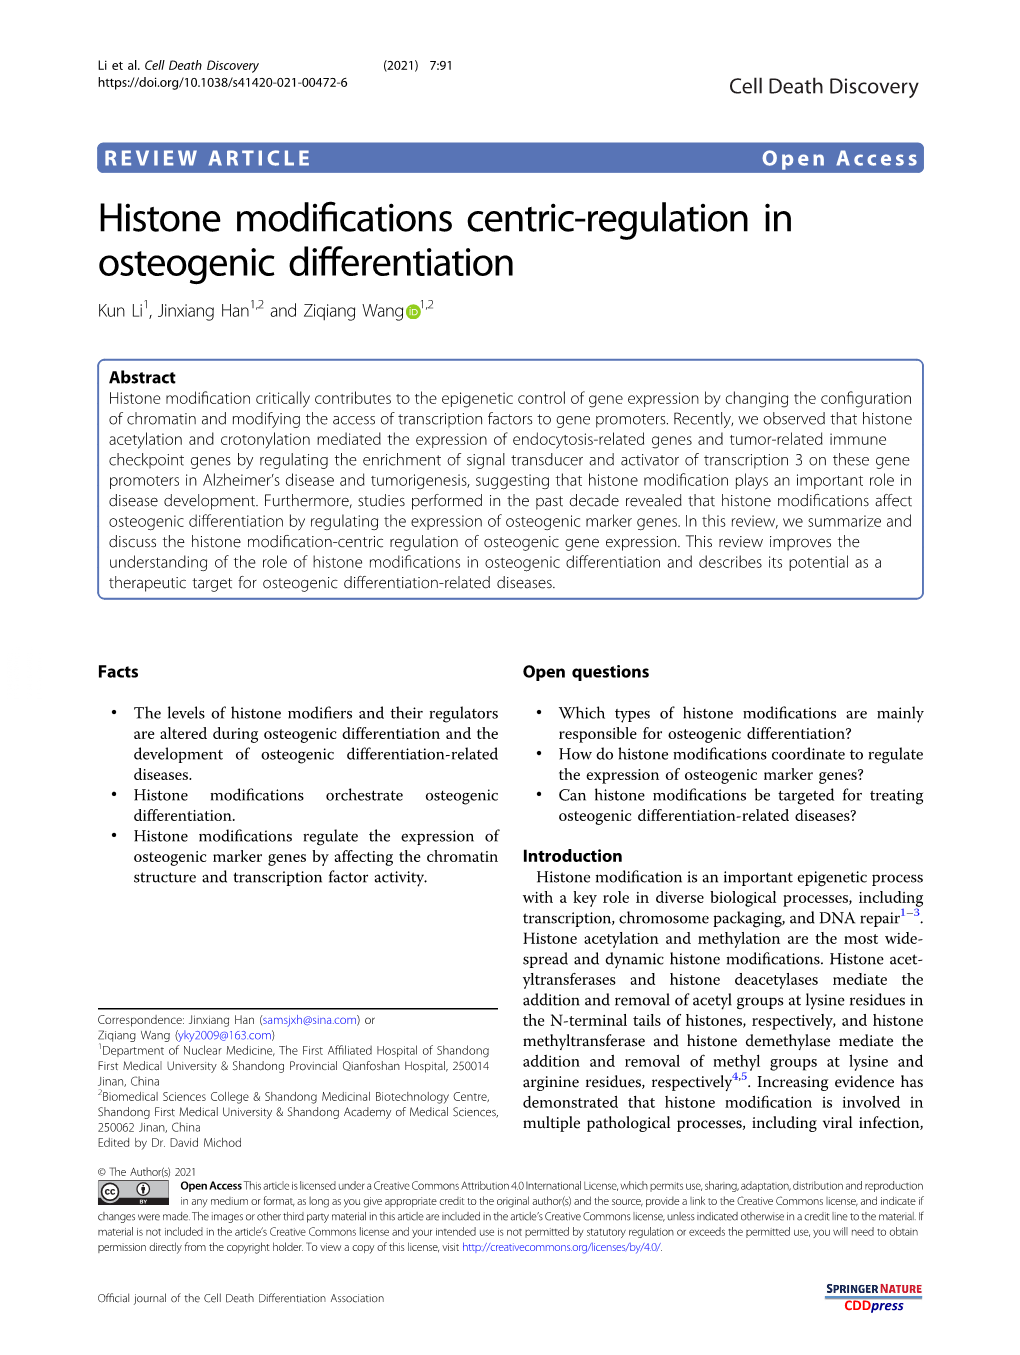 Histone Modifications Centric-Regulation in Osteogenic Differentiation